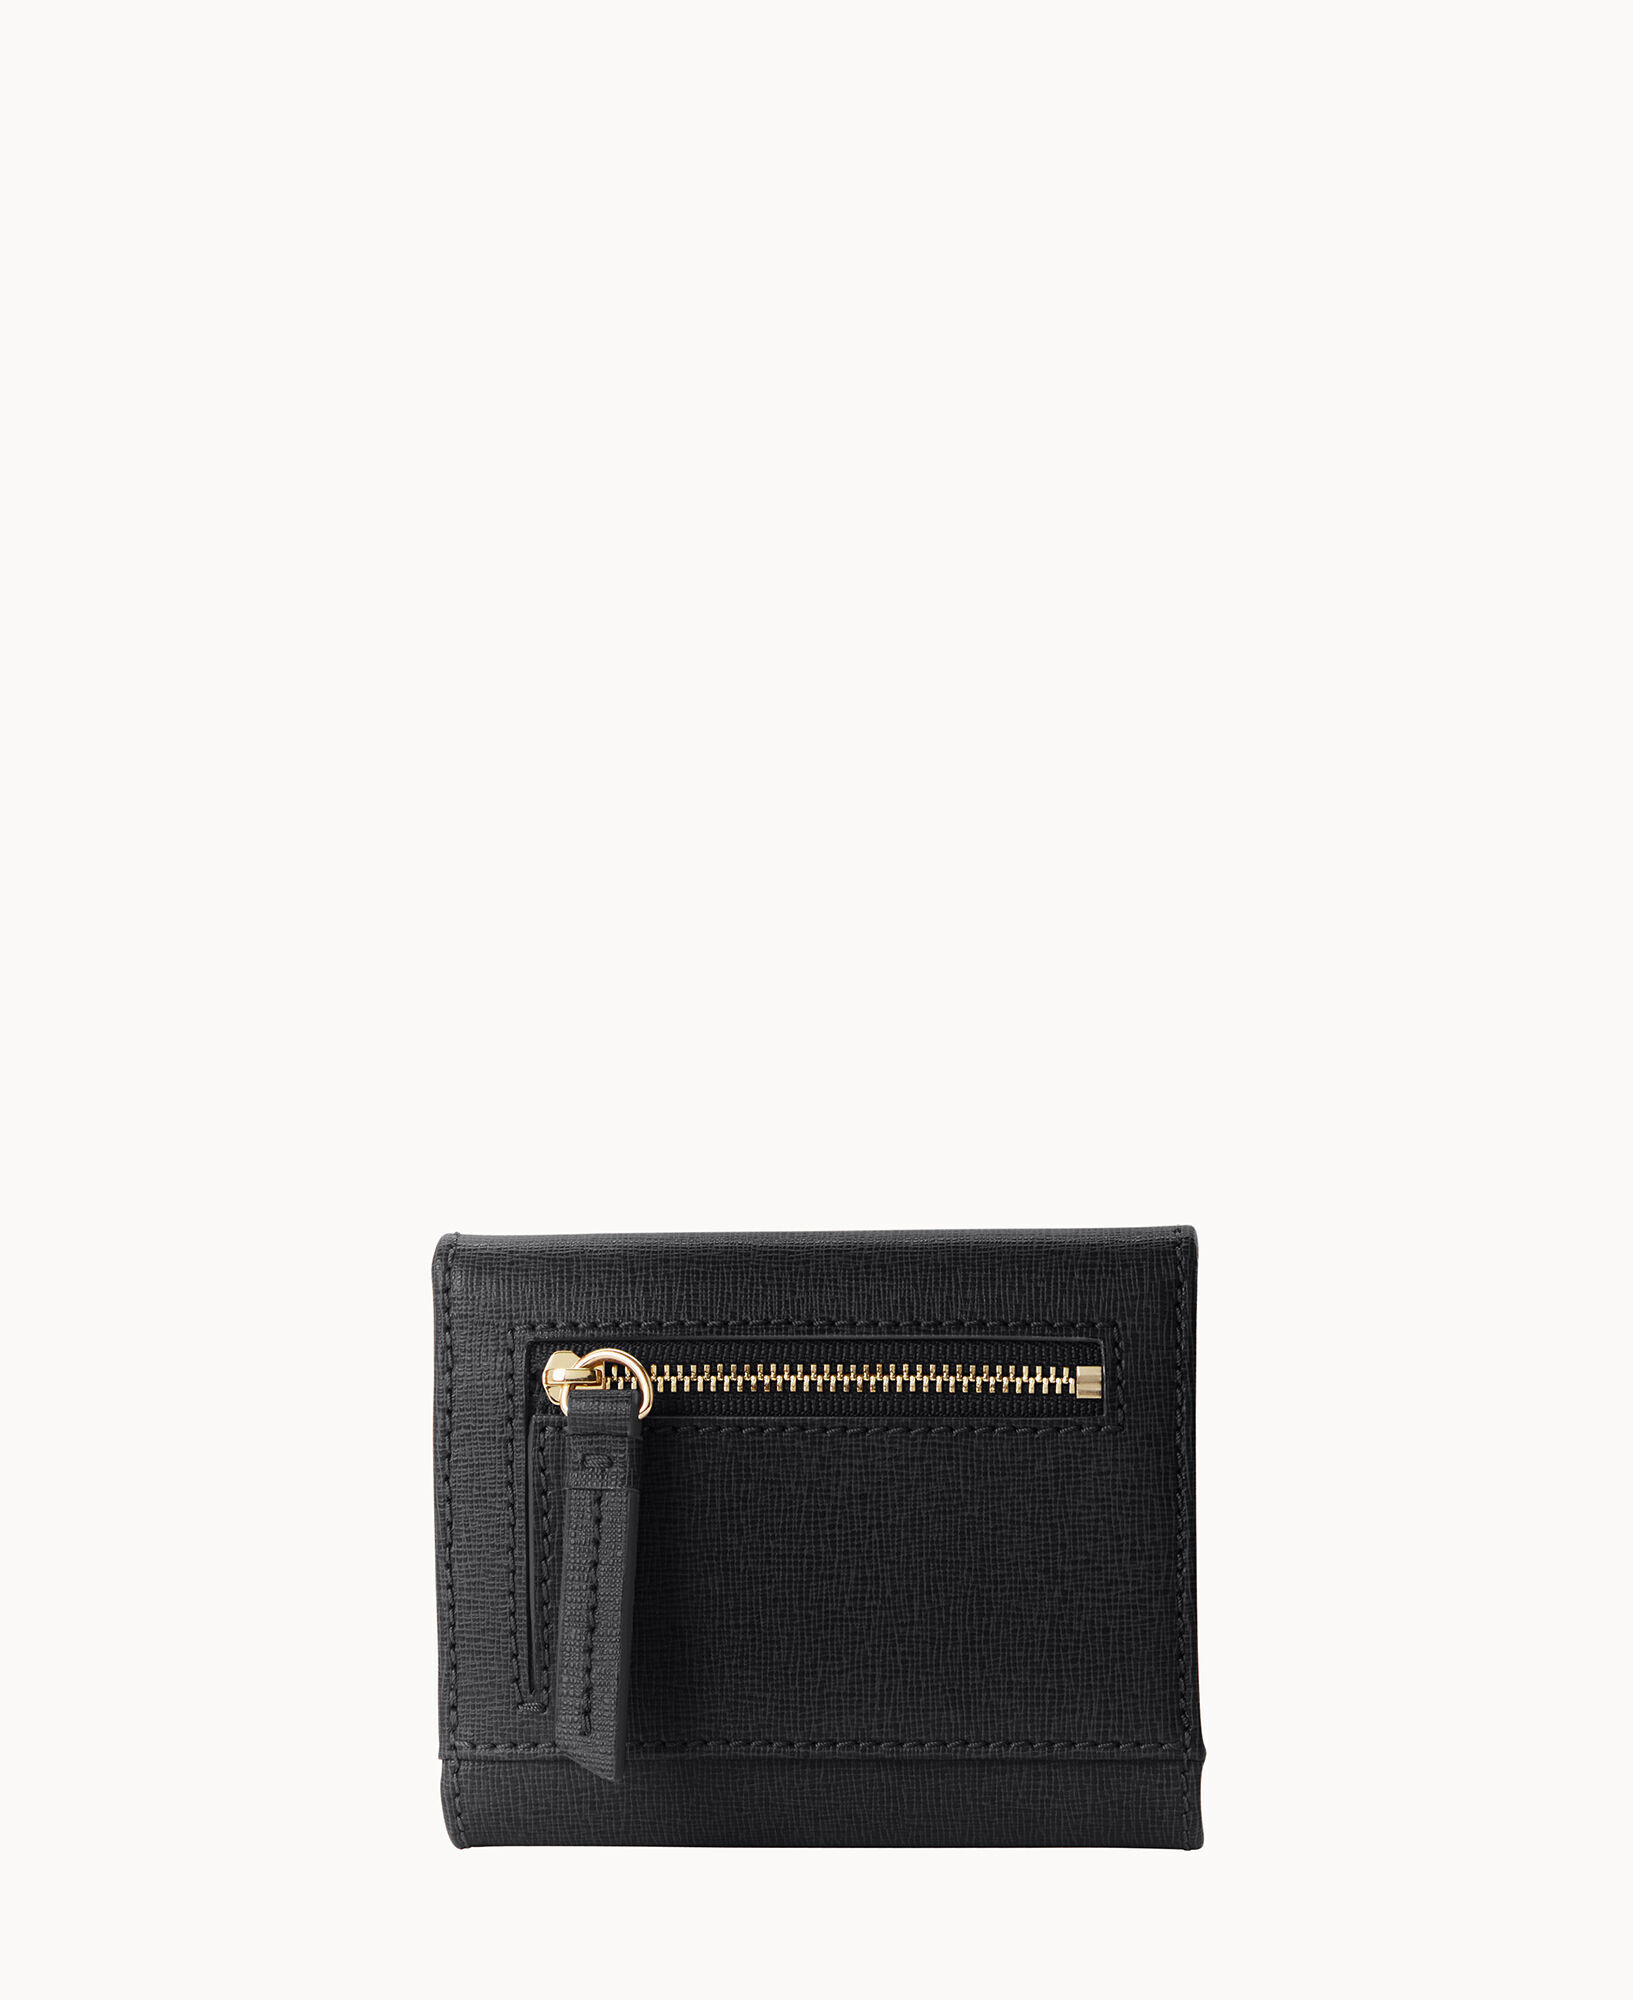 Dooney & Bourke Saffiano Small Flap Wallet